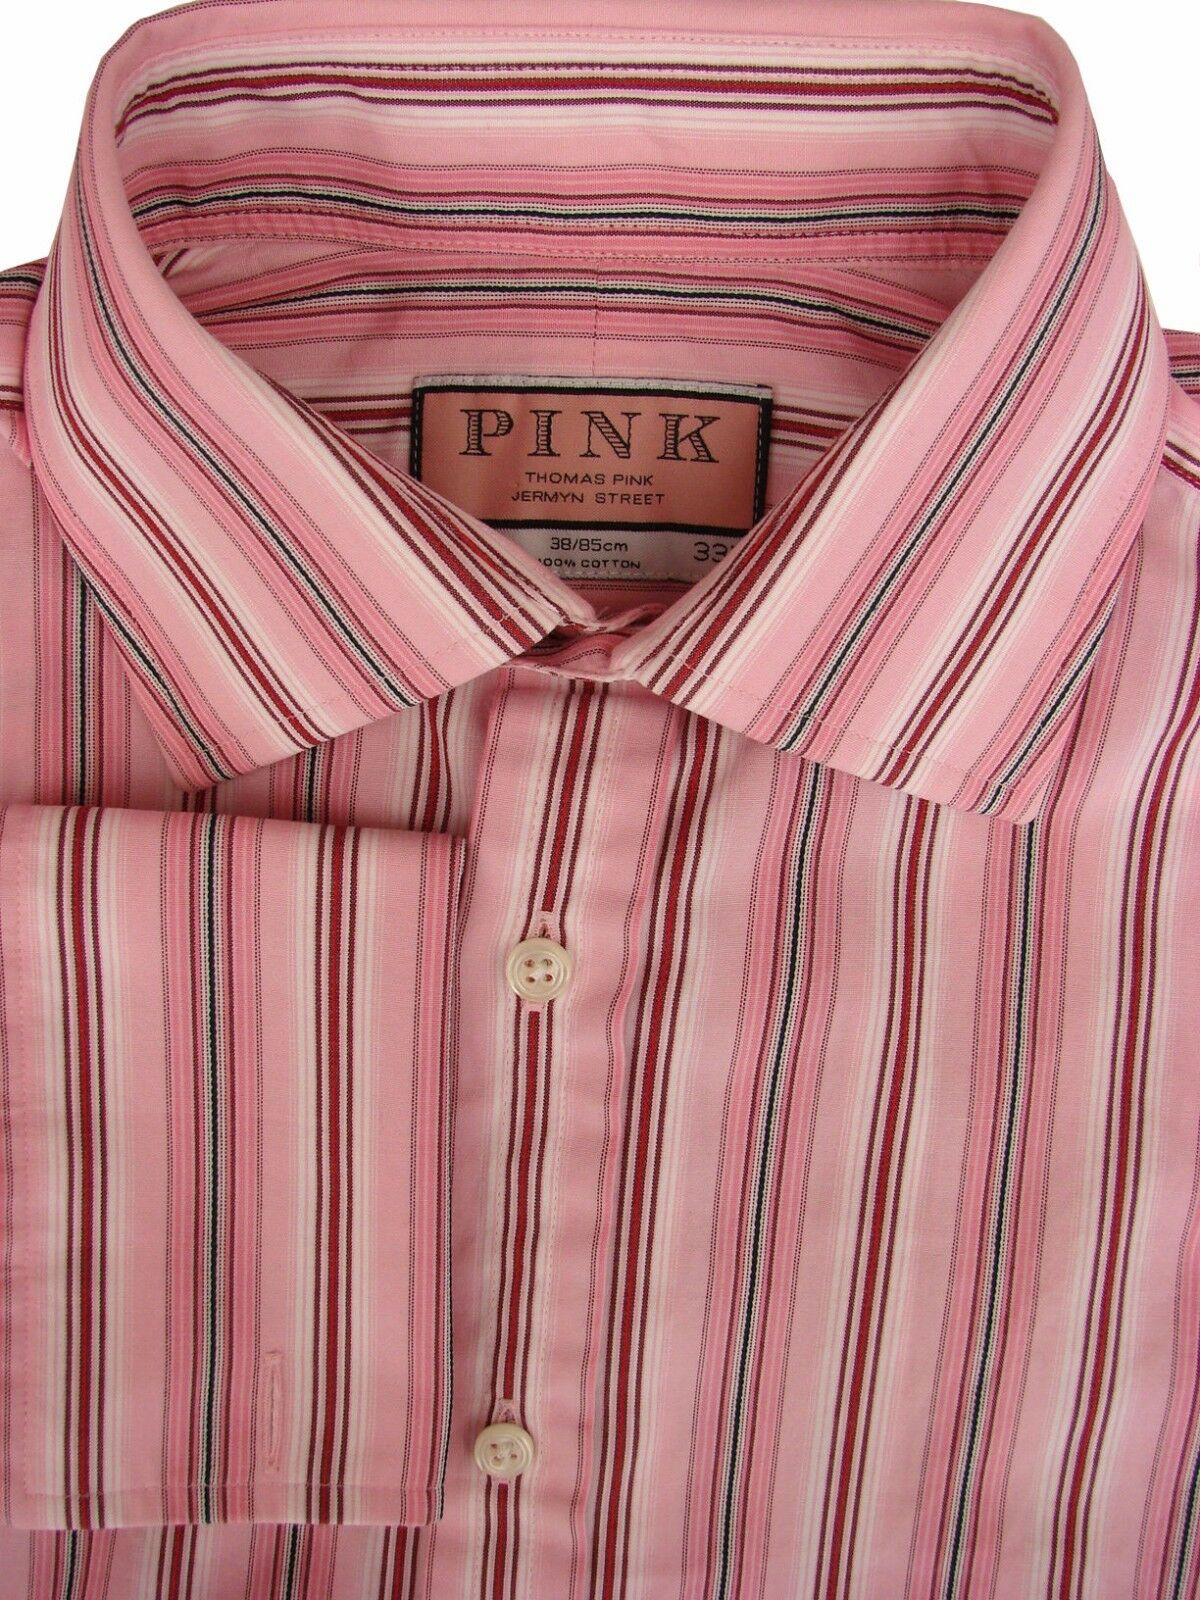 Thomas Pink, Shirts